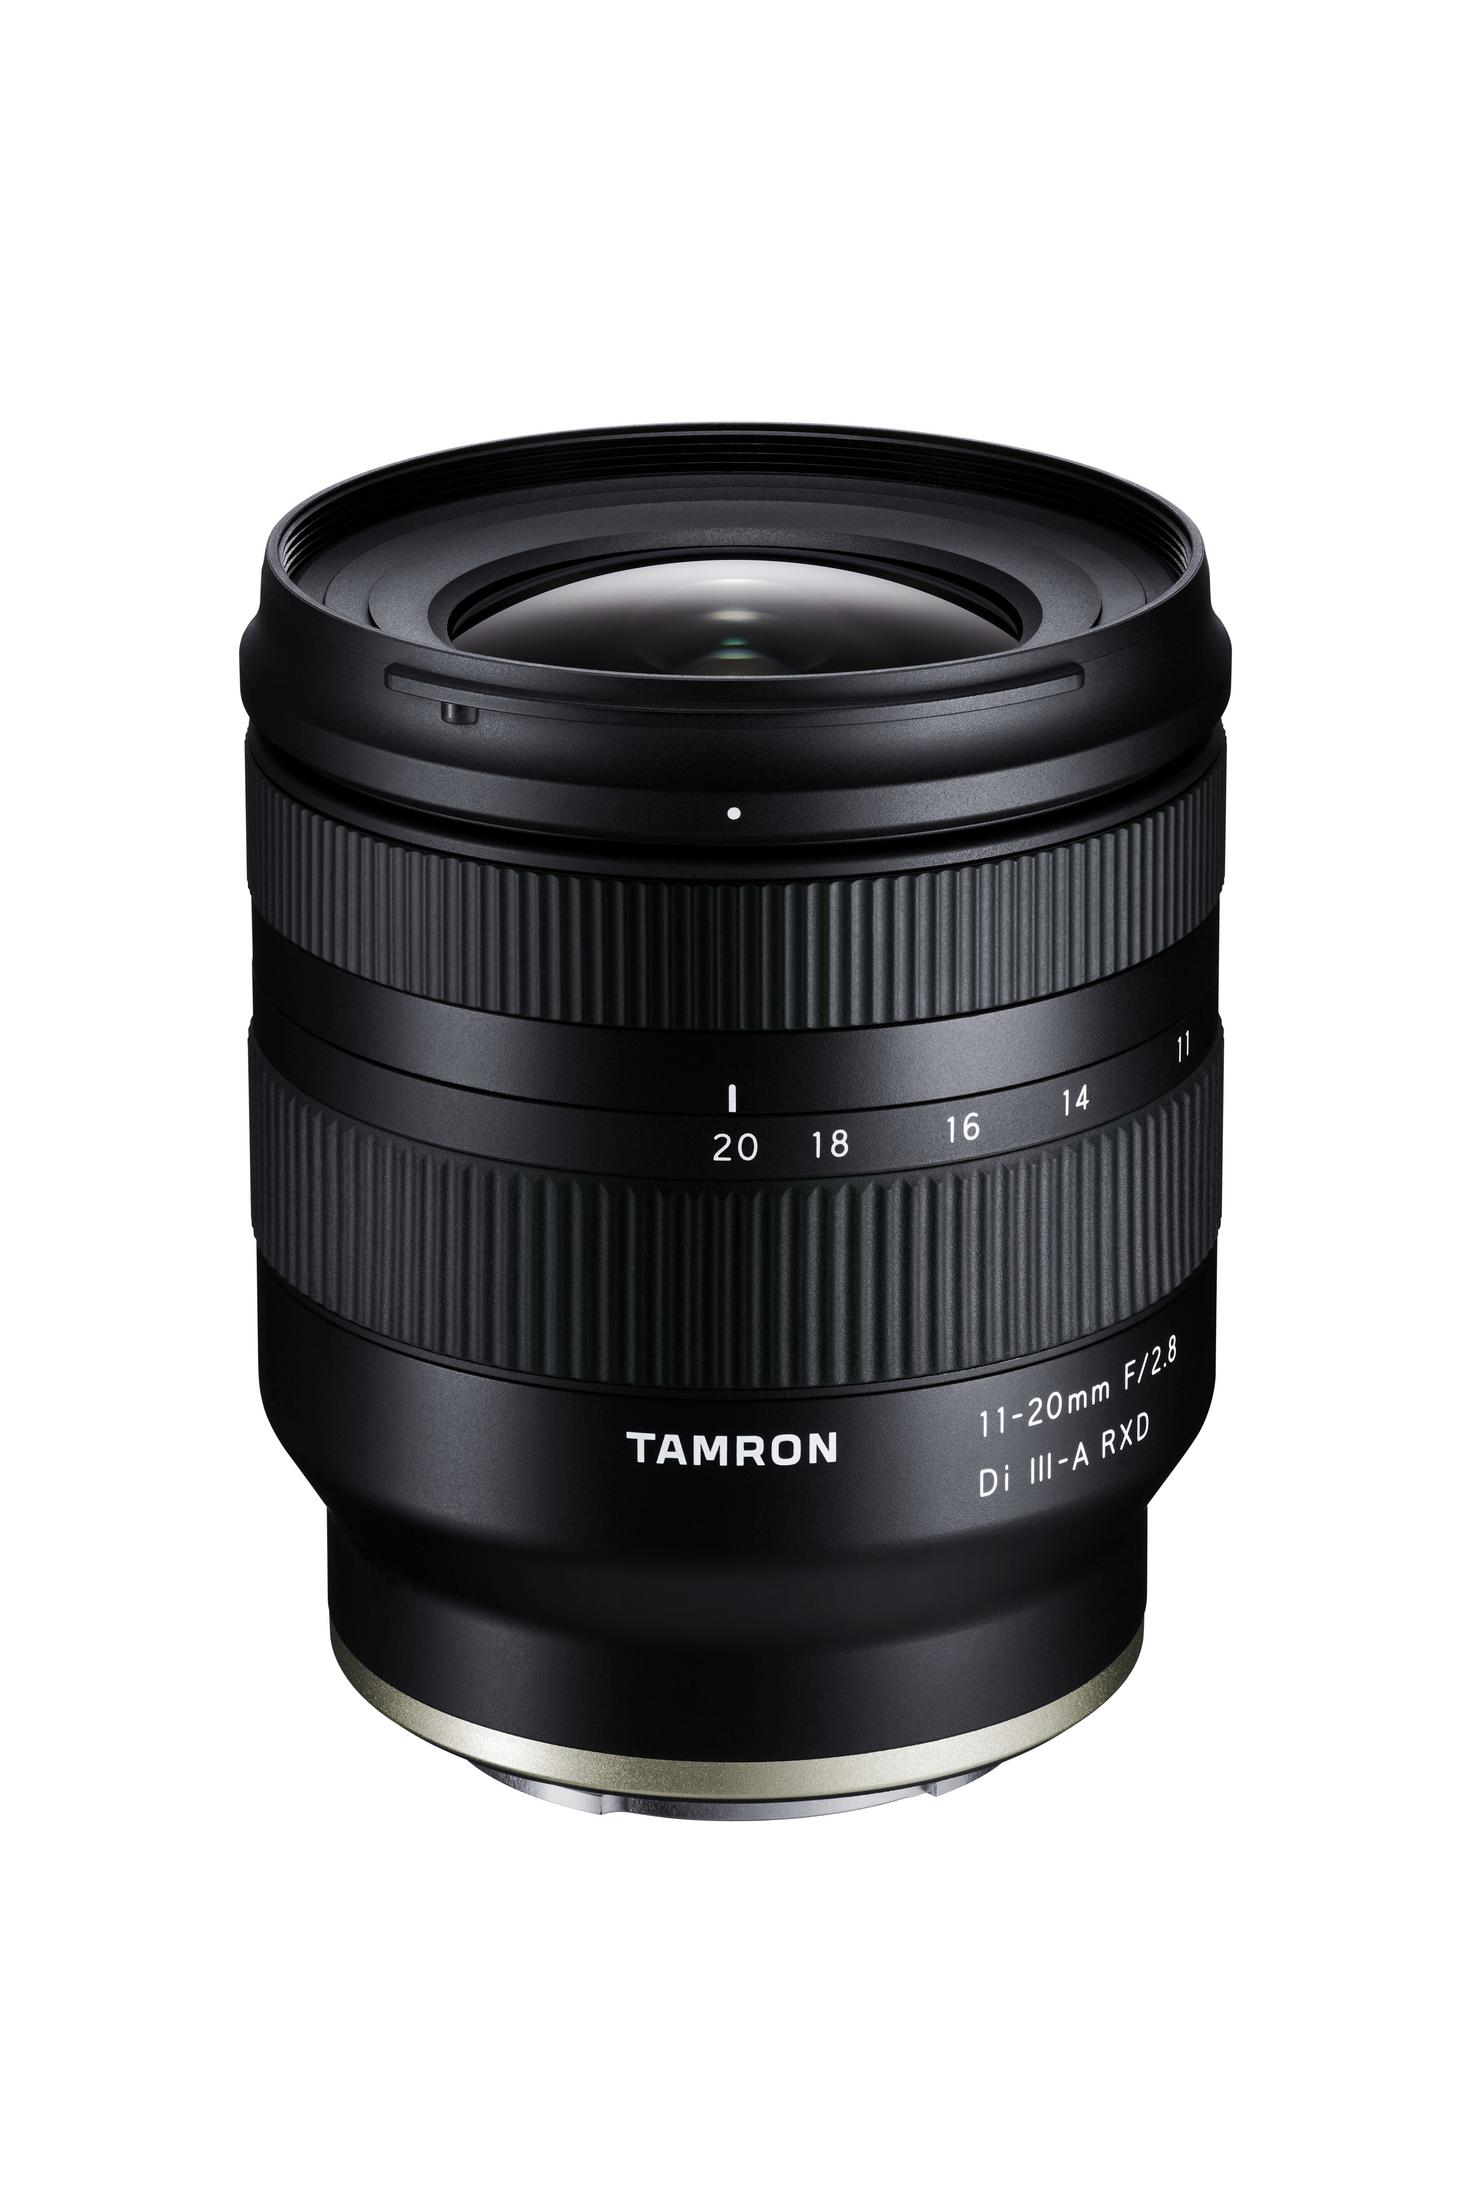 TAMRON B060S 11-20MM F/2.8 f./2.8 Schwarz) - für RXD (Objektiv mm E-Mount, III-A Sony 20 mm DI 11